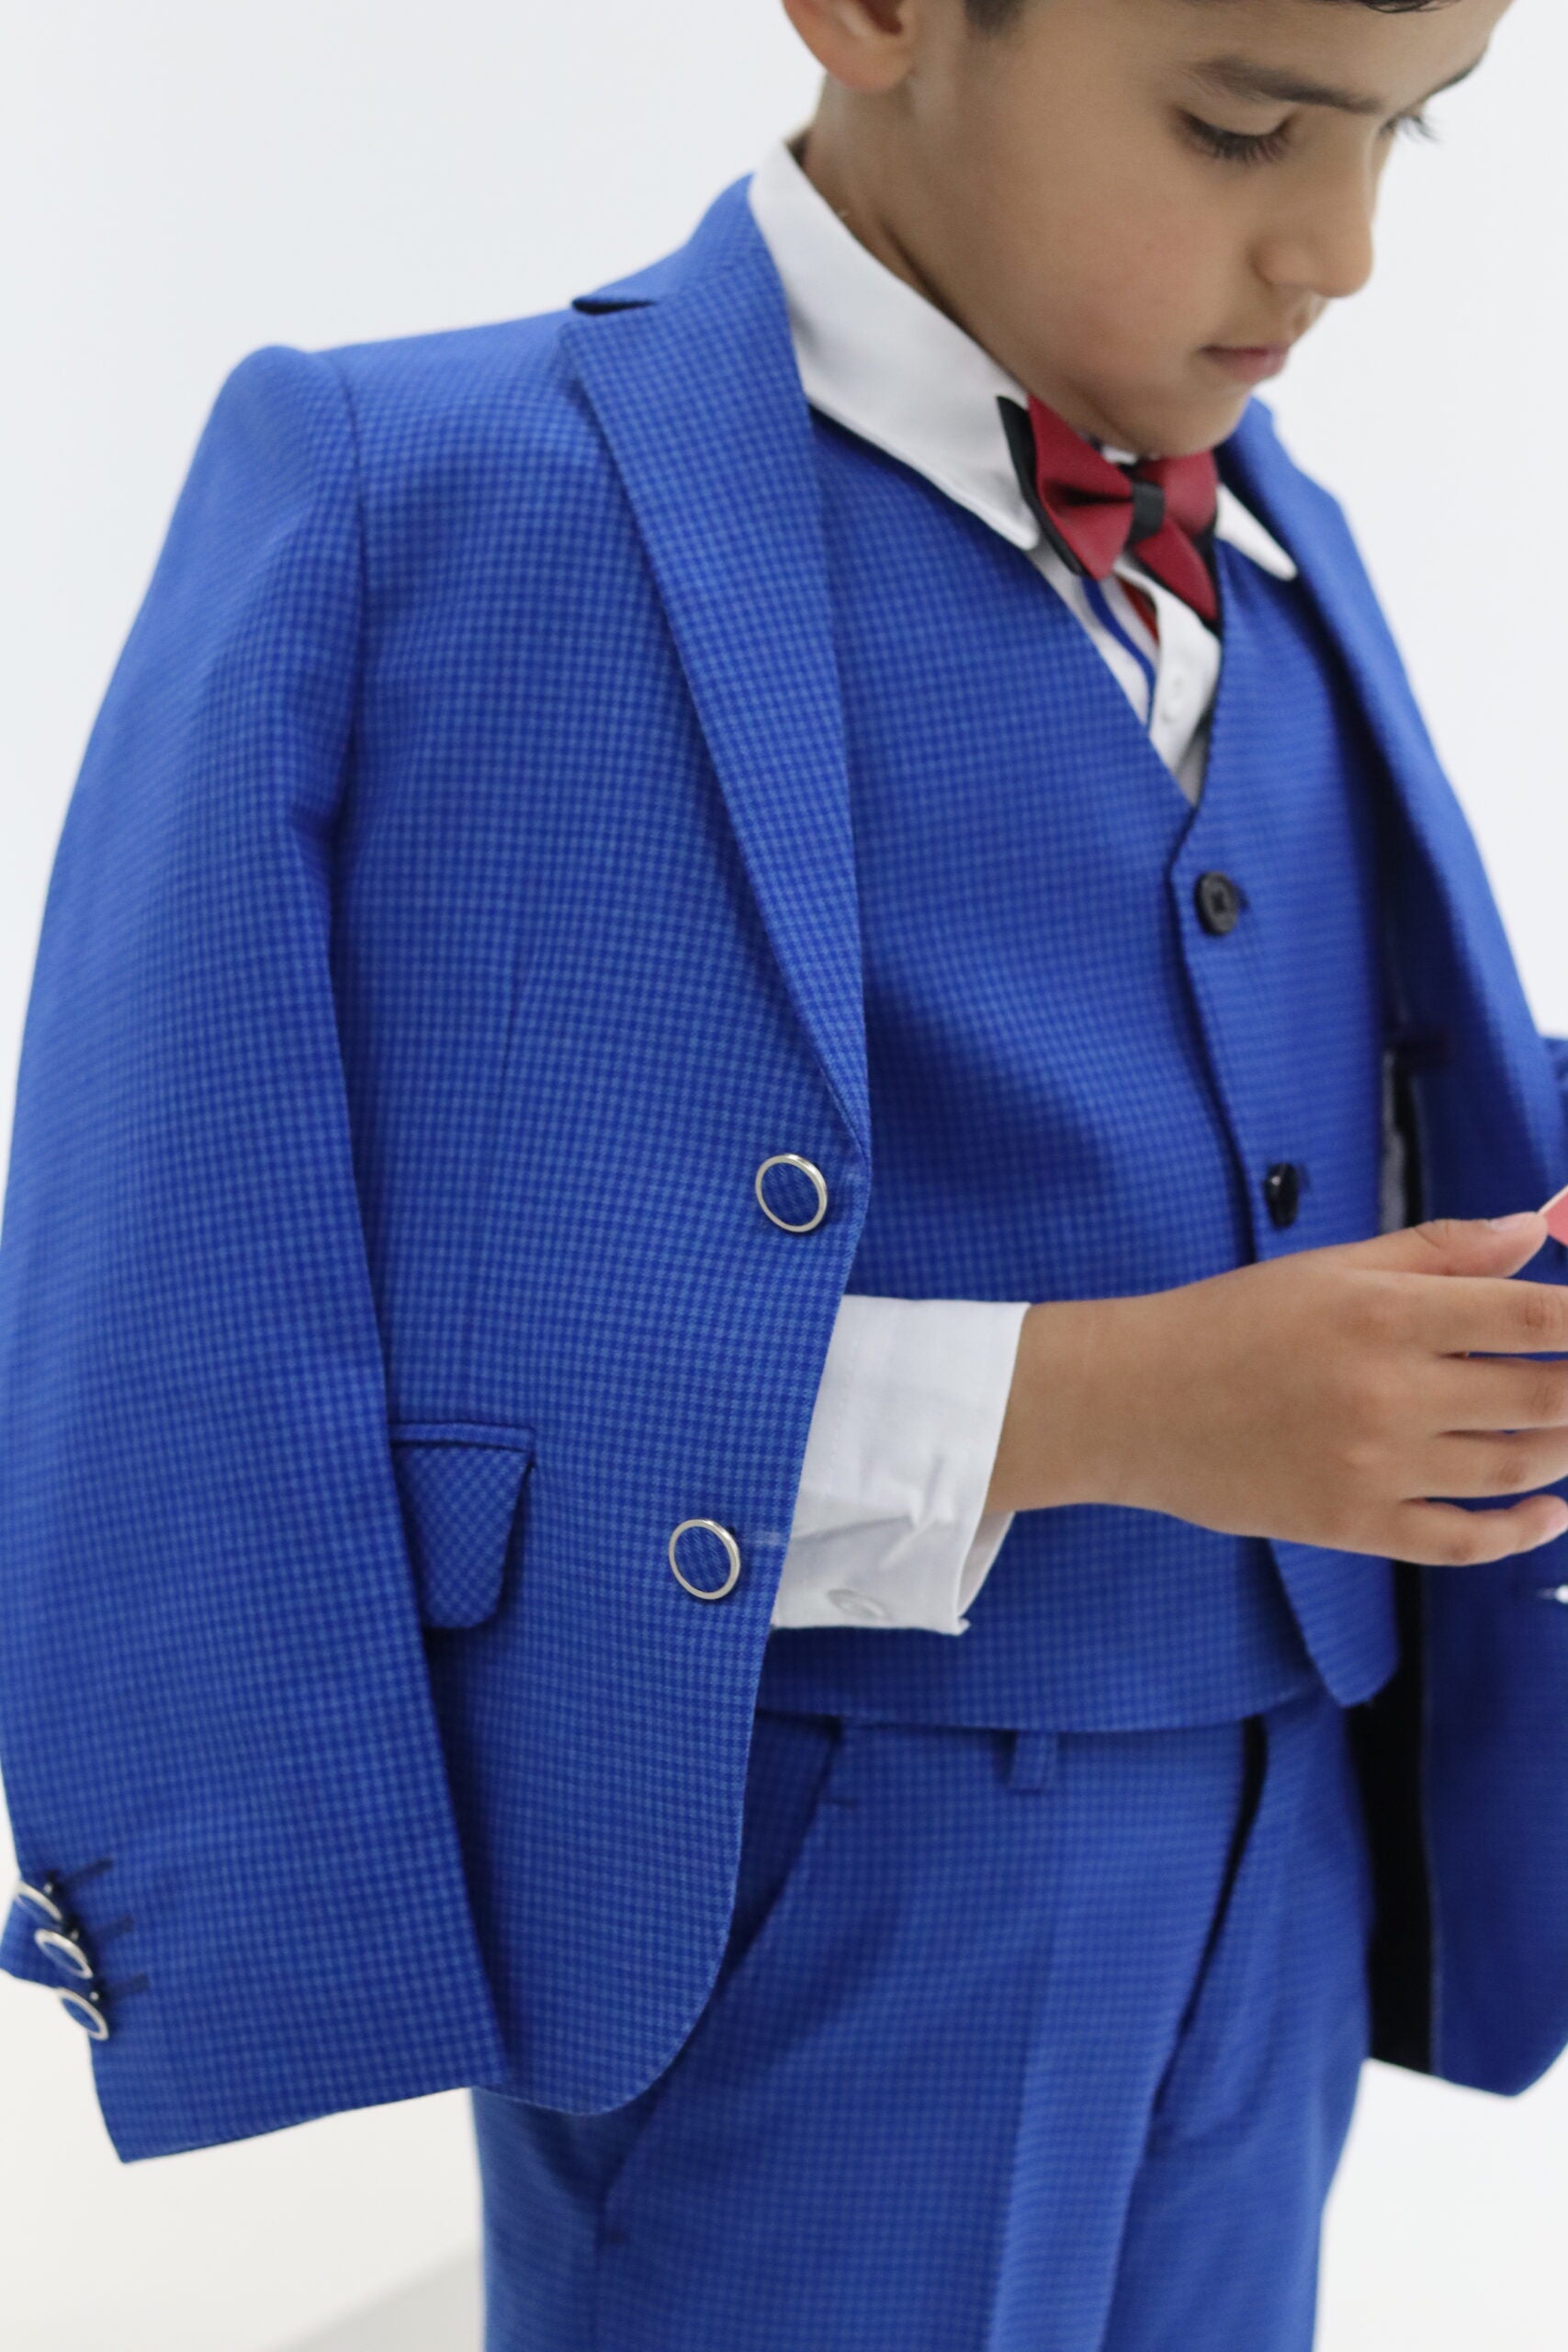 Boys Formal Slim Fit Small Check Blue Suit 3Pc Set